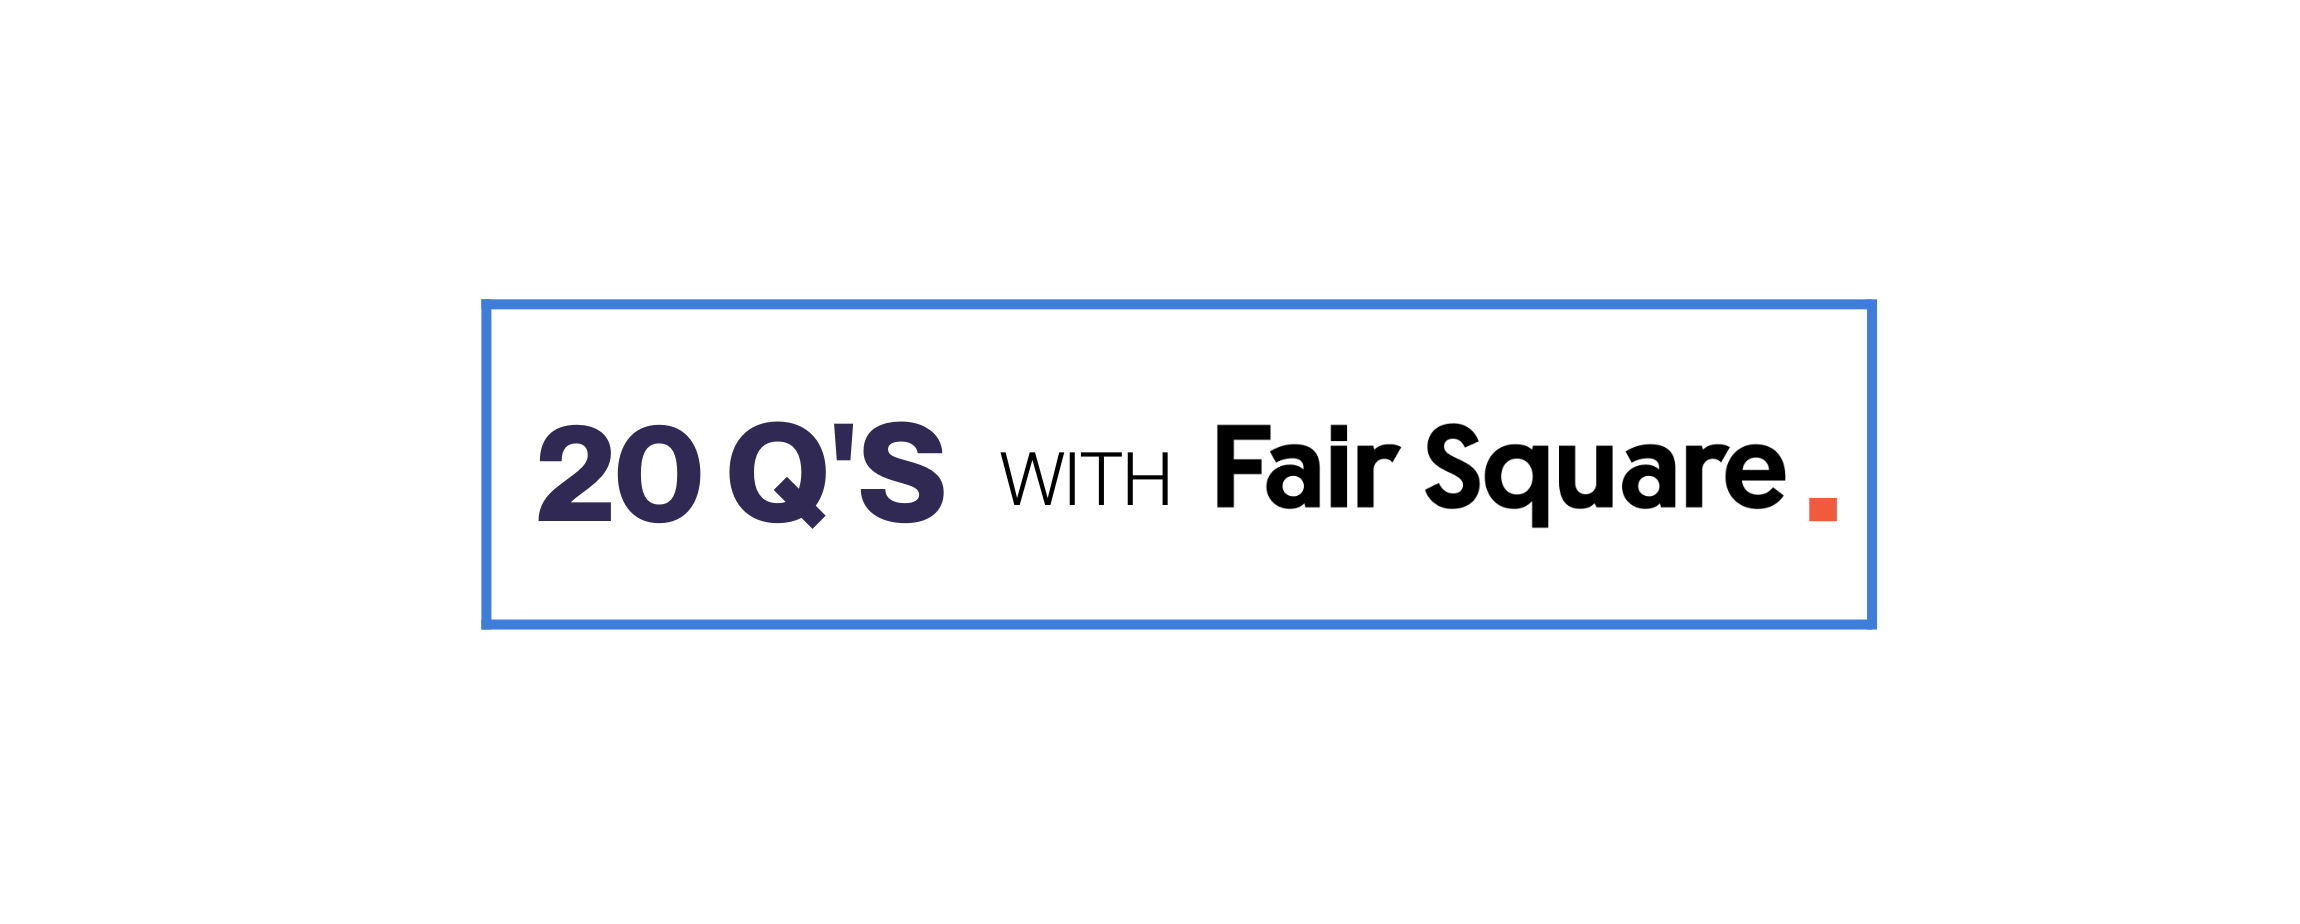 20 Q's with Fair Square